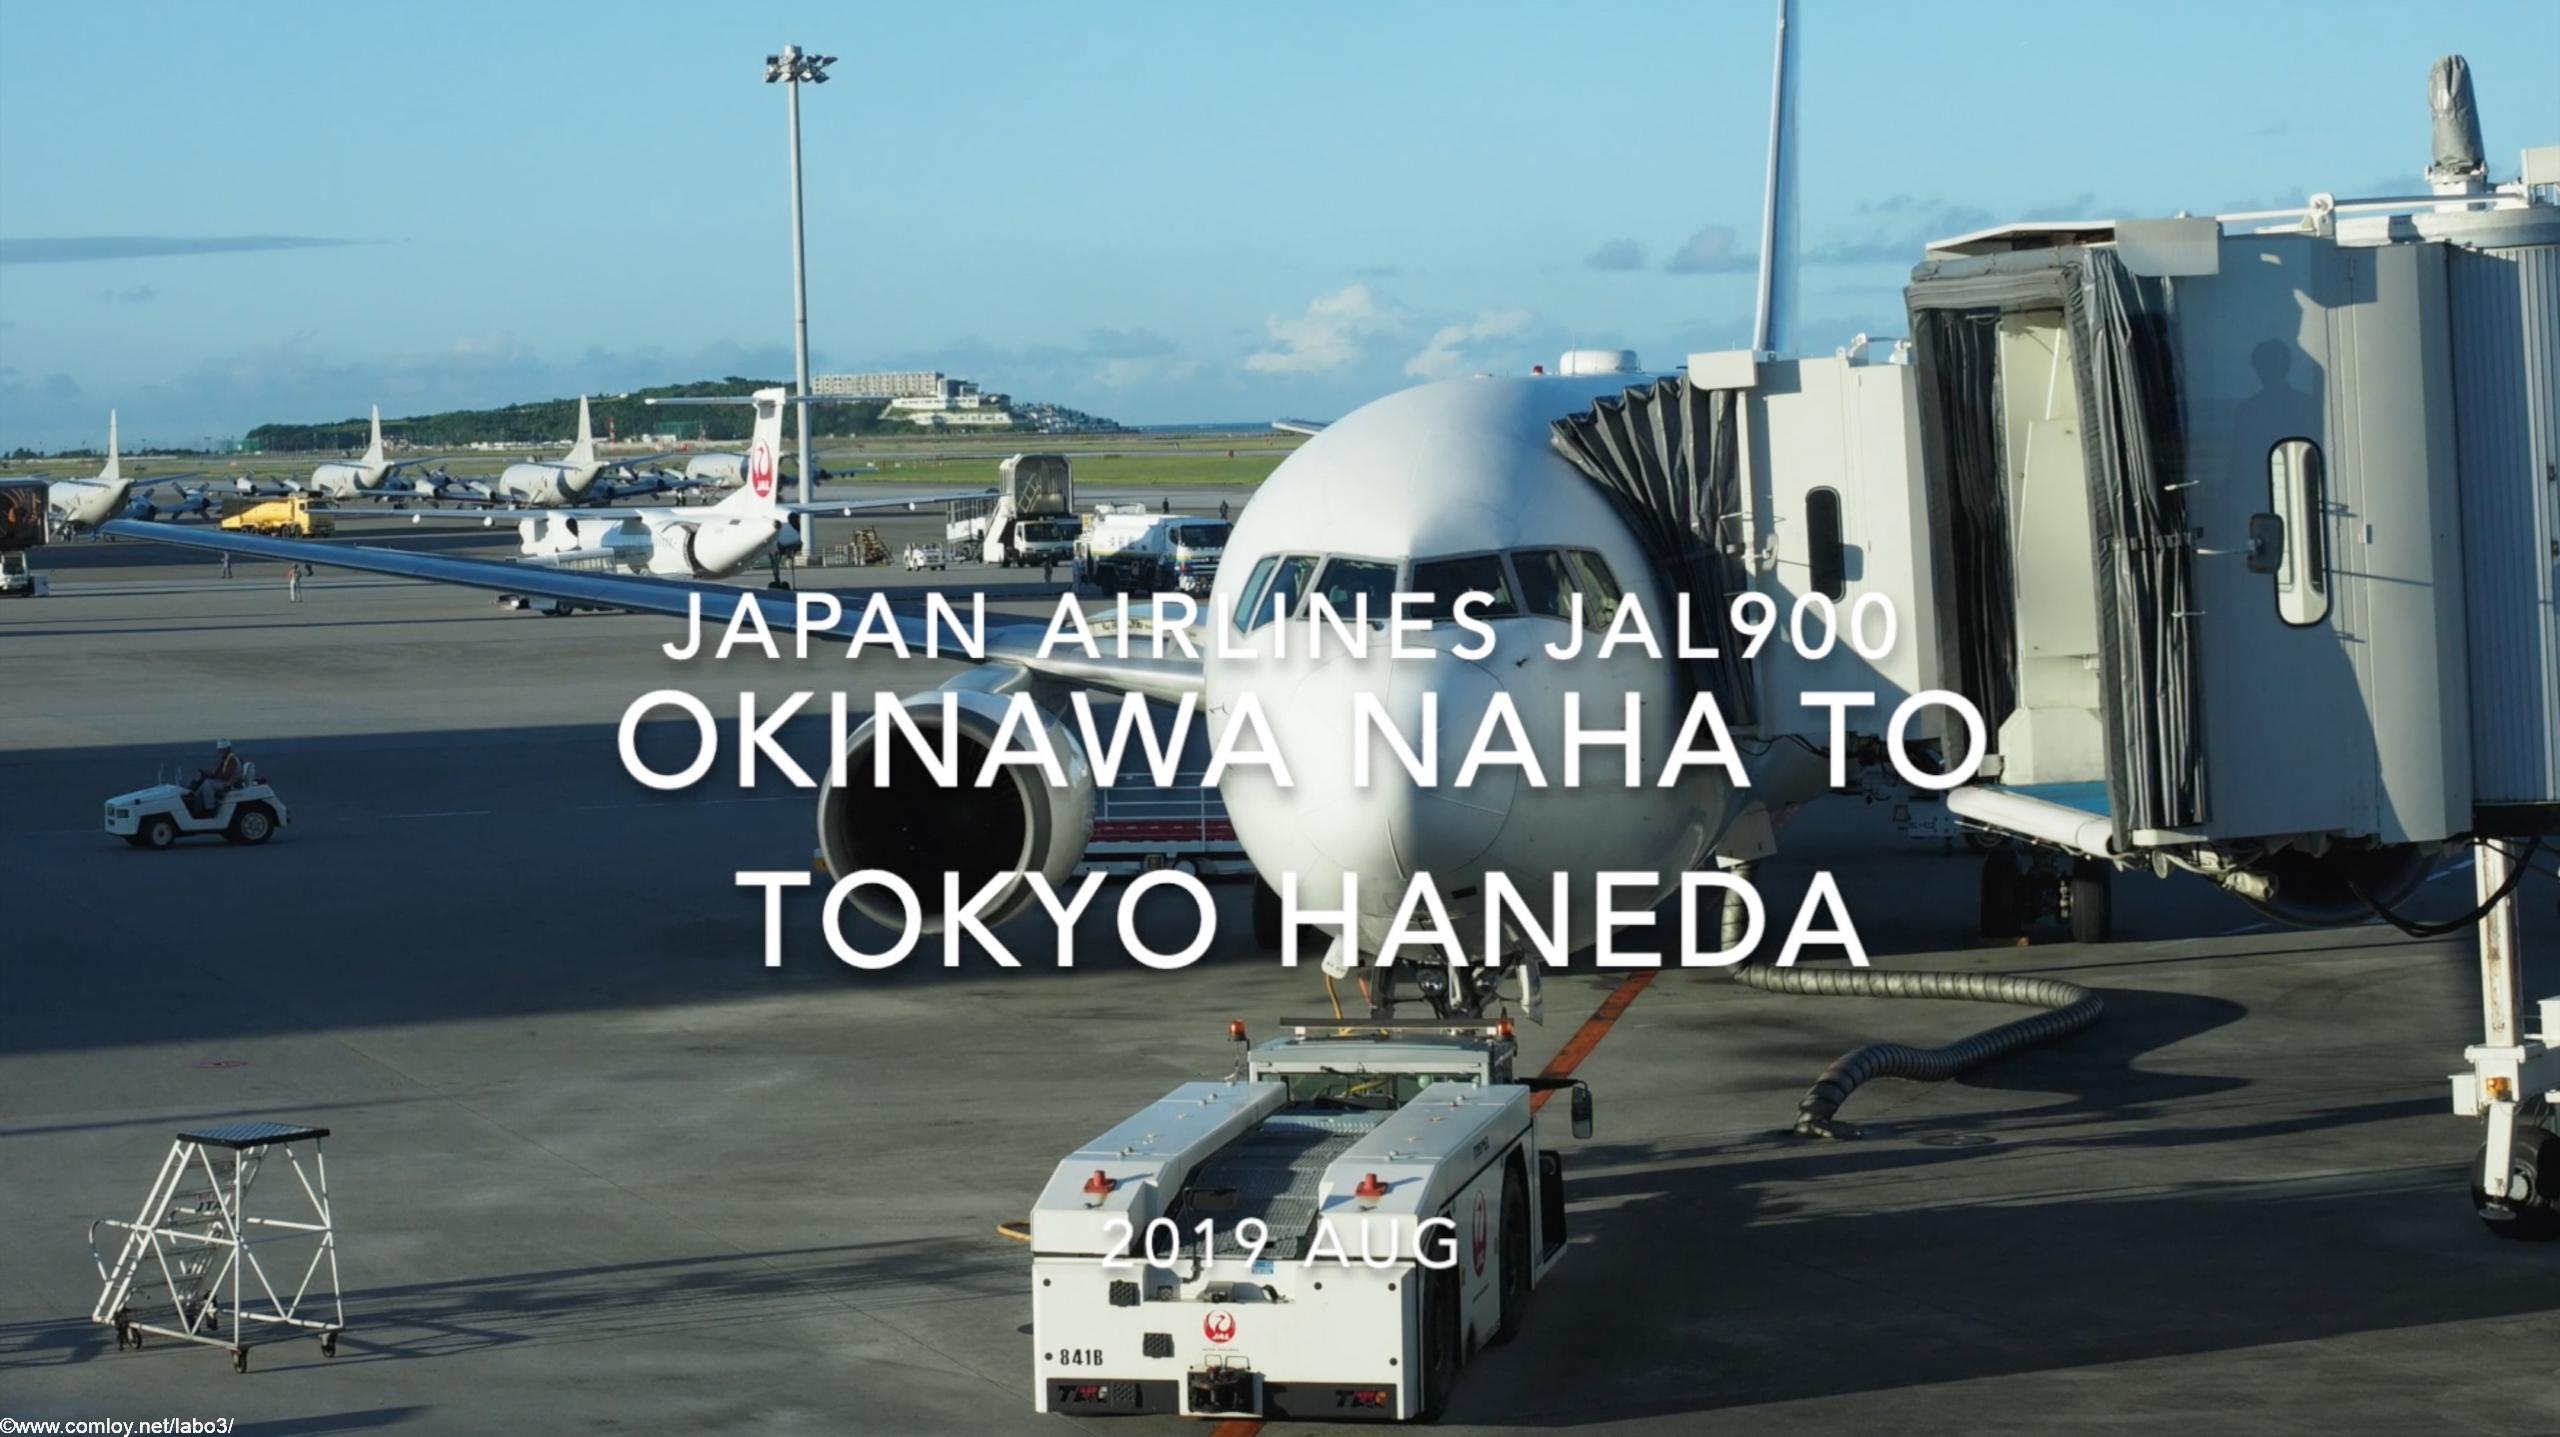 【Flight Report】Japan airlines JAL900 OKINAWA NAHA TO TOKYO HANEDA 2019 AUG 日本航空 那覇 - 羽田 搭乗記